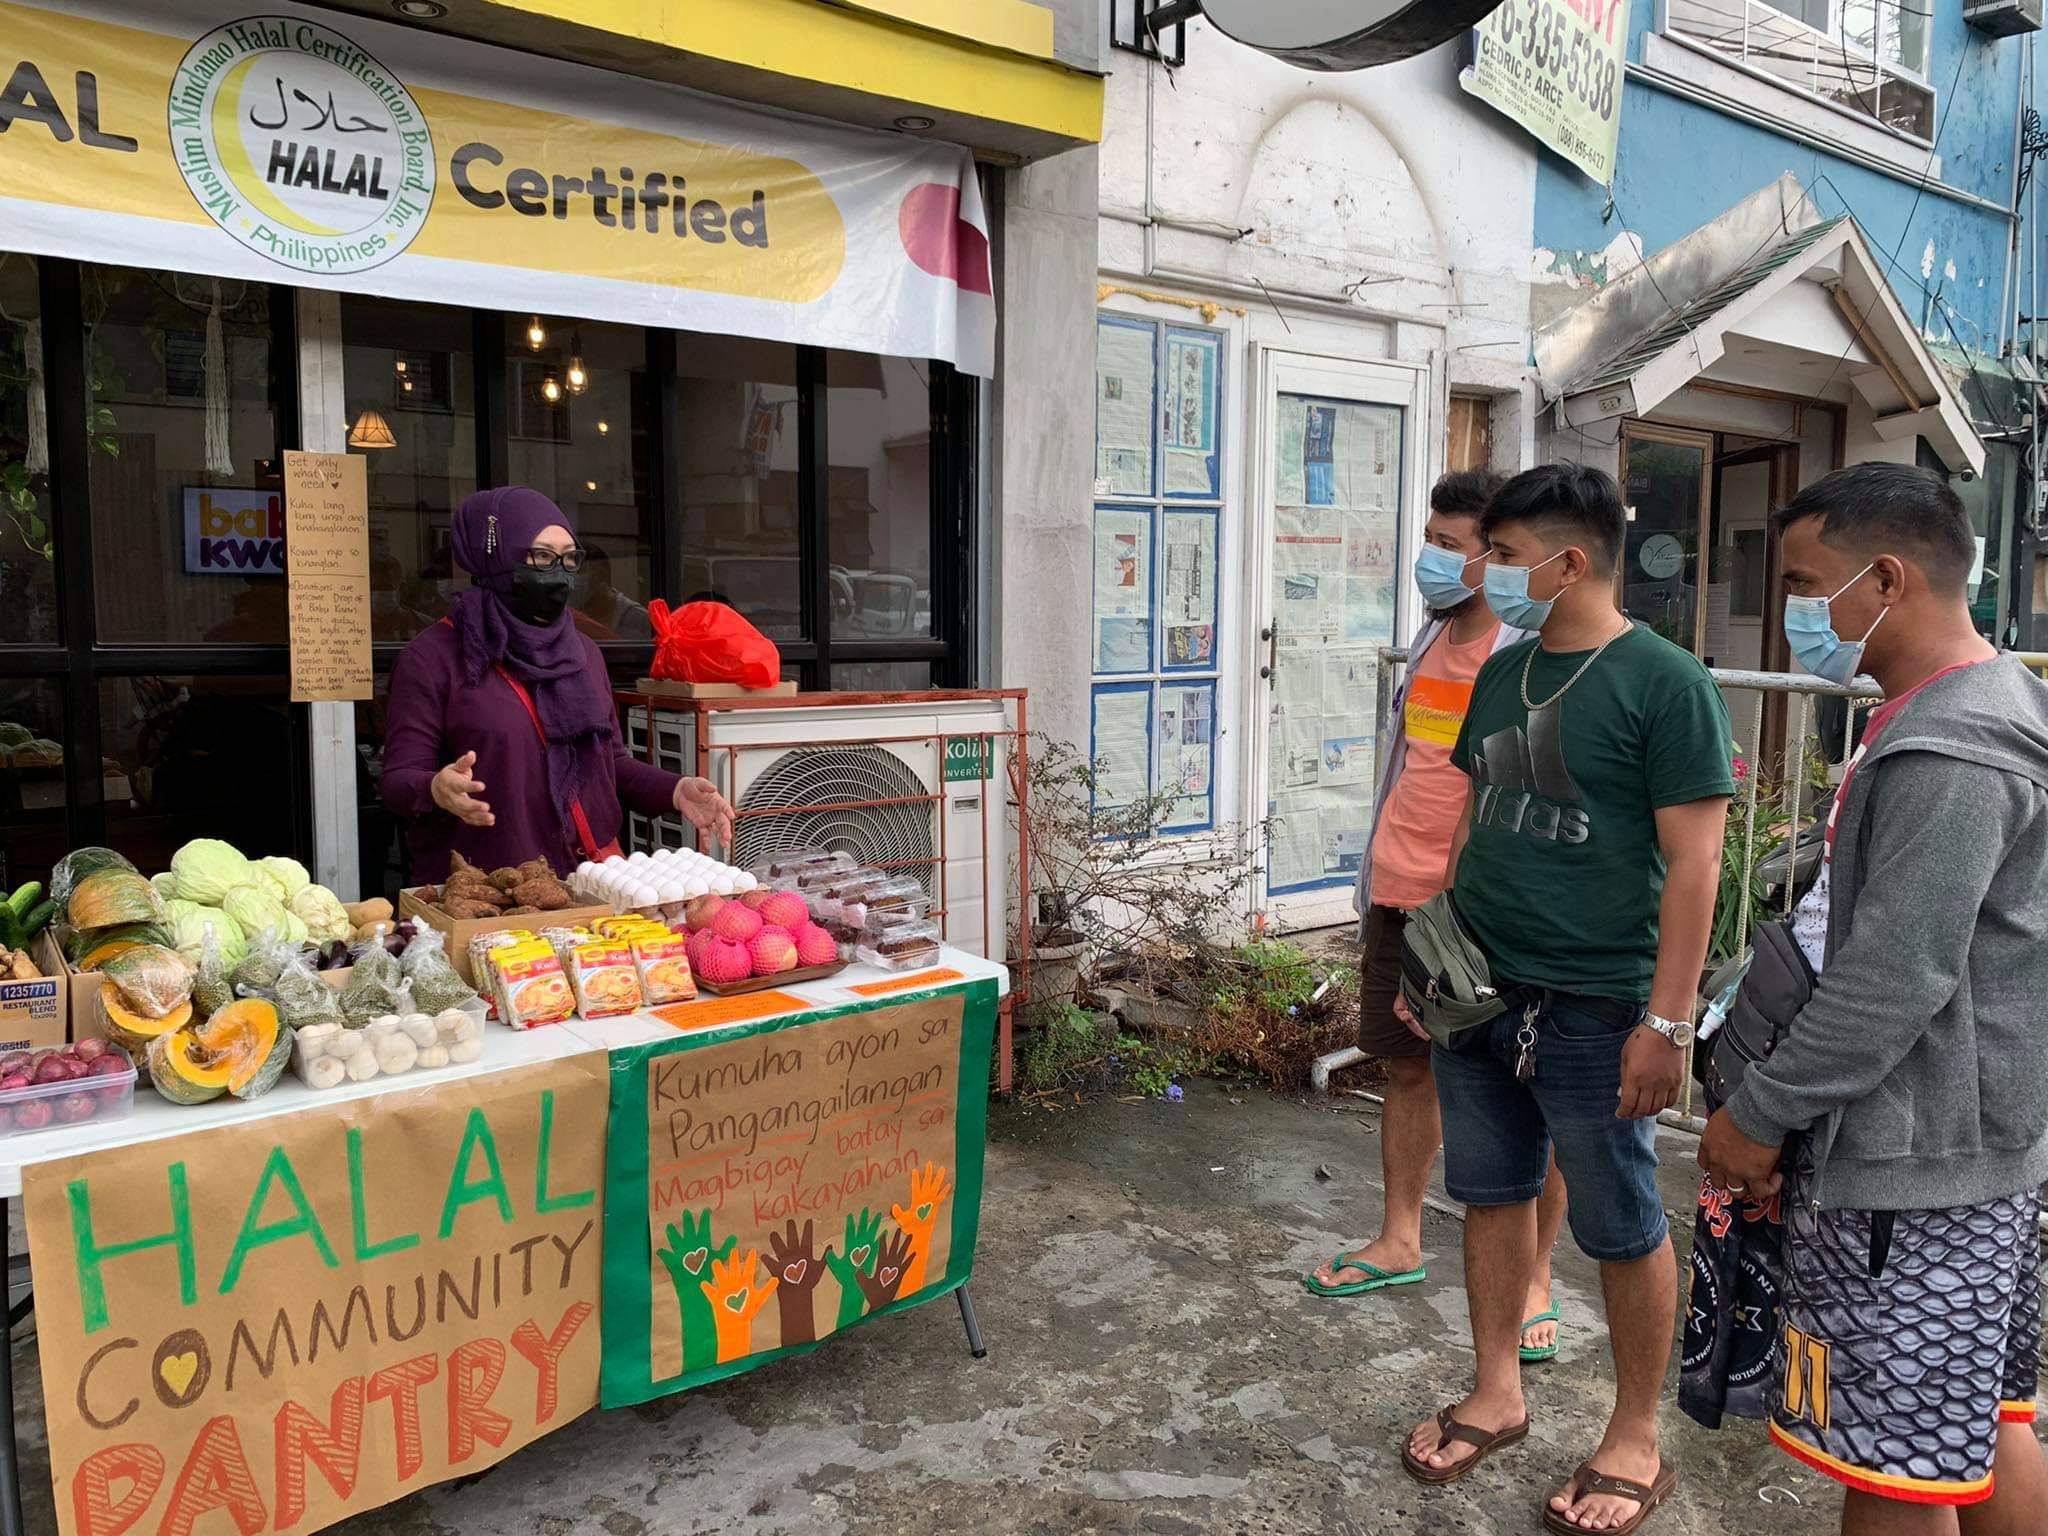 Halal restaurant owner’s community pantry ‘profiled’ by Cagayan de Oro cops